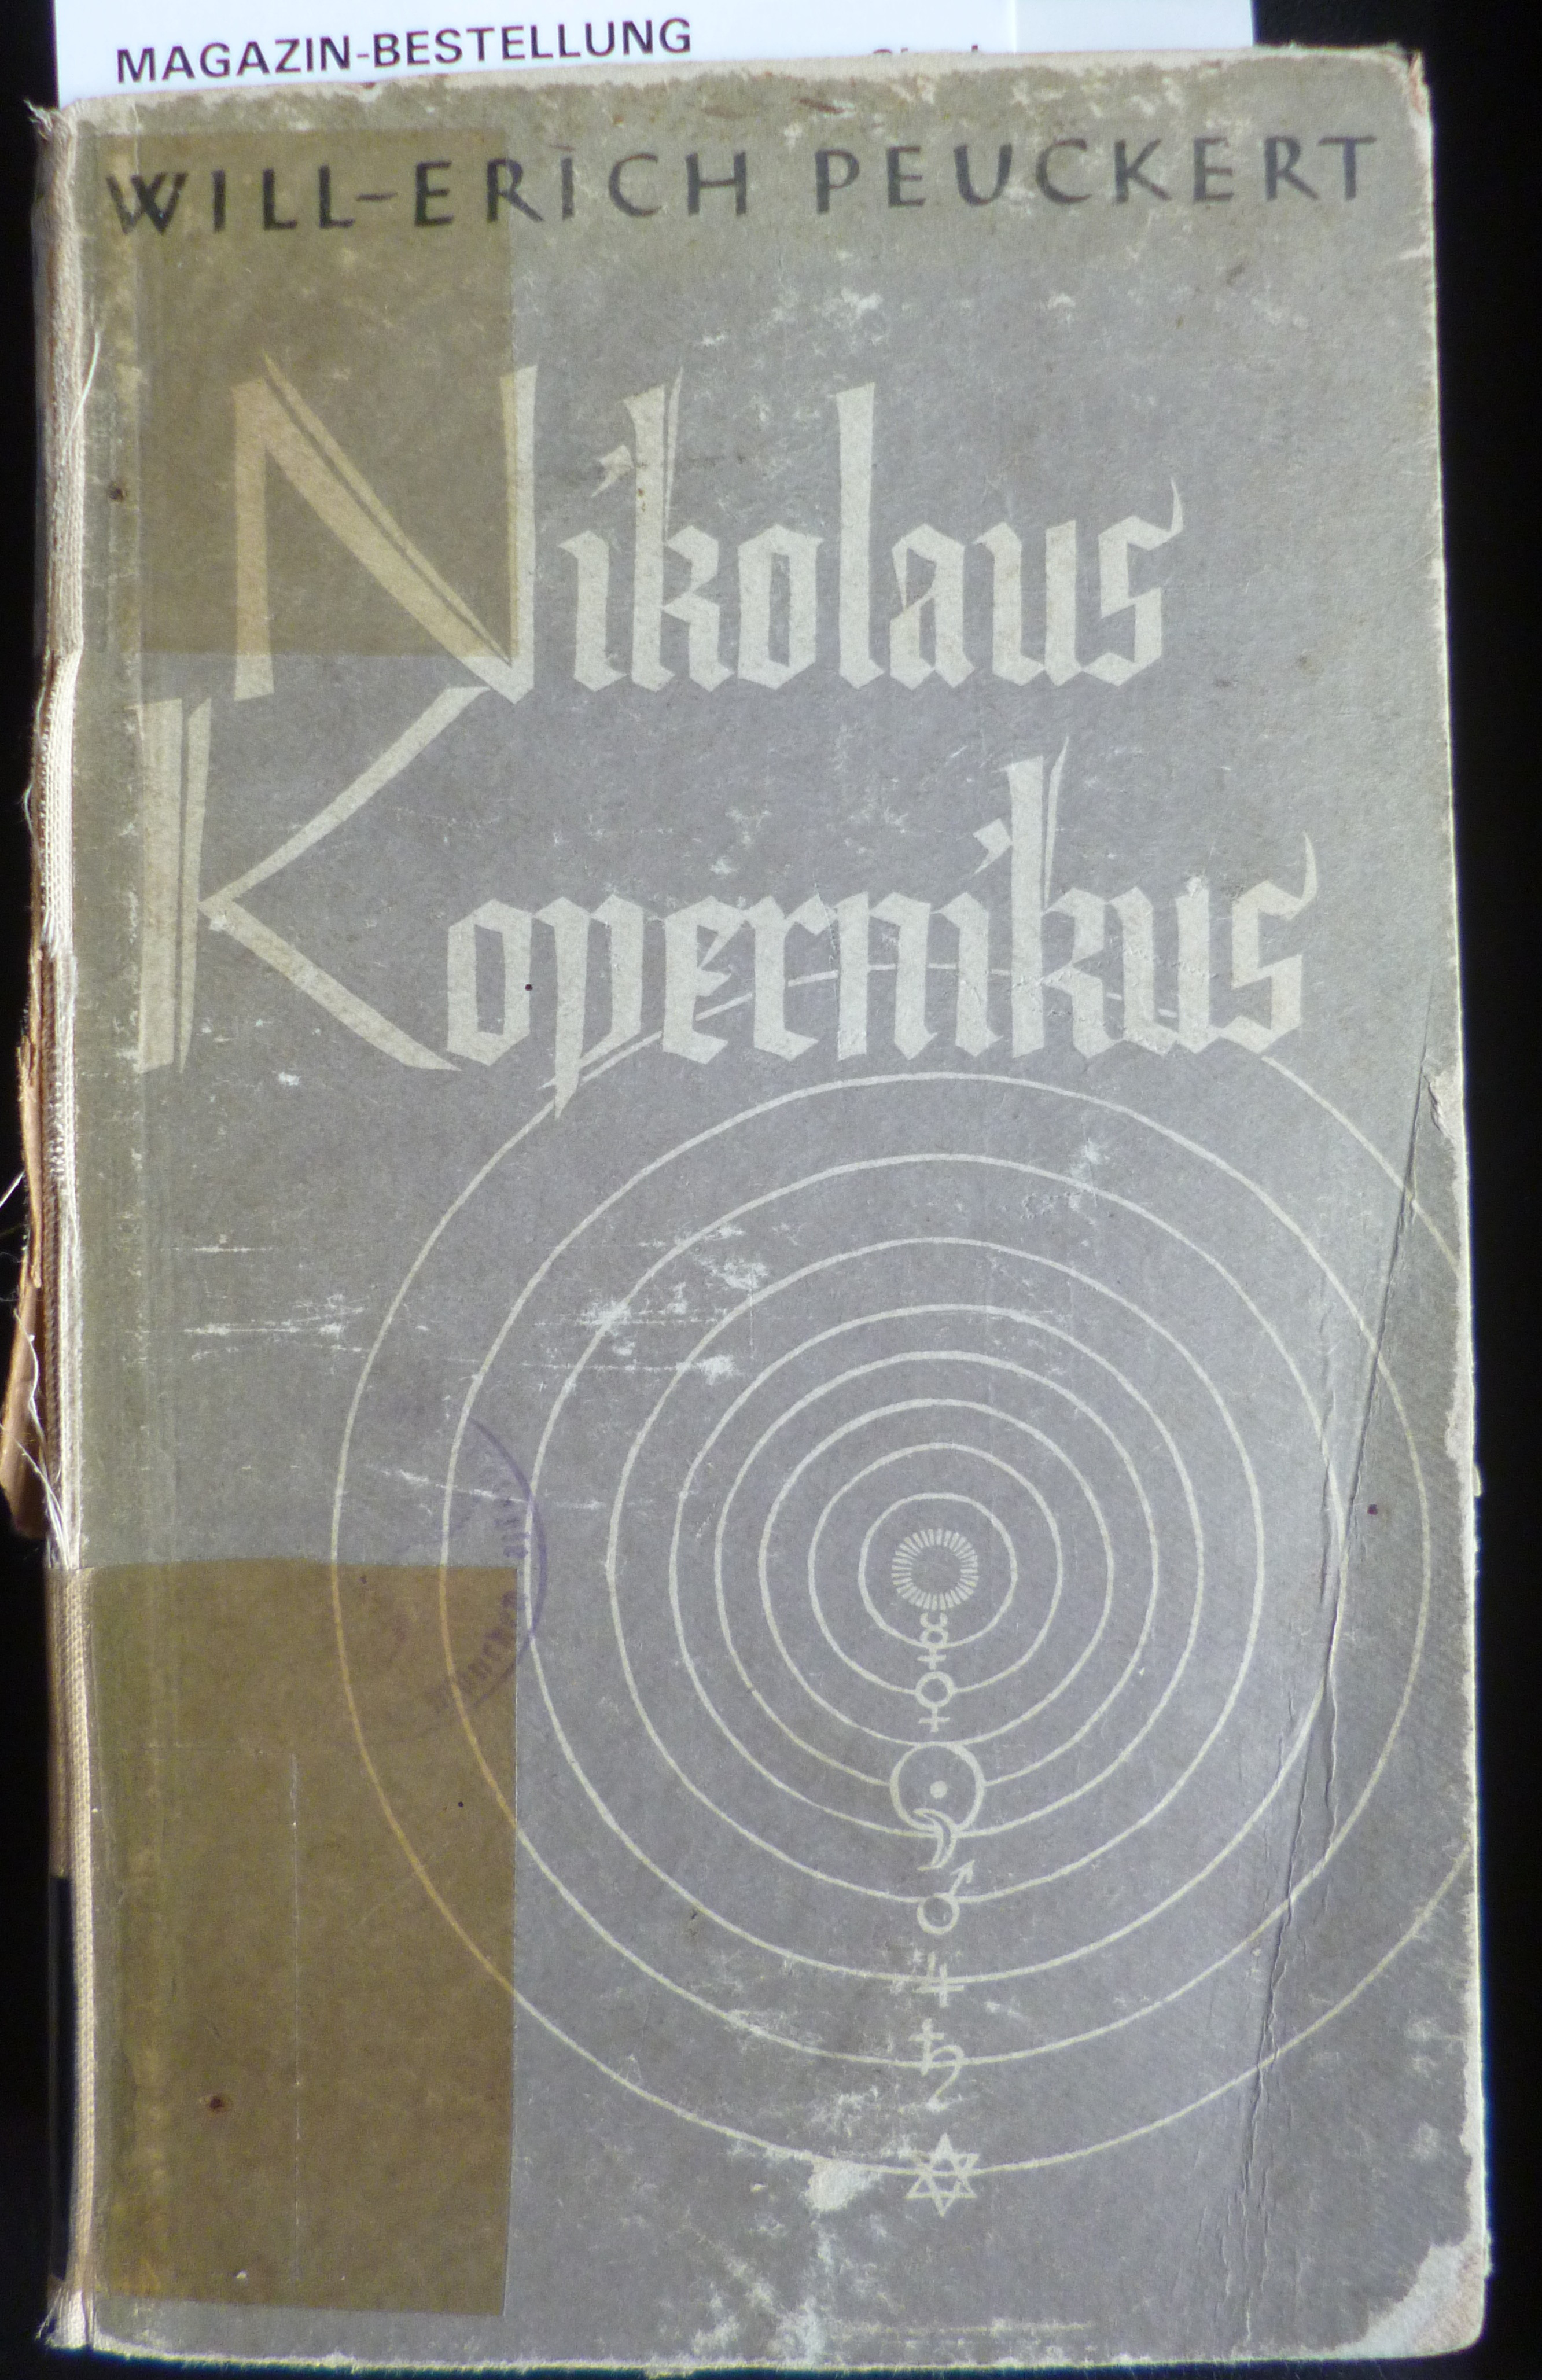 Peuckerts
Kopernikus-Biographie